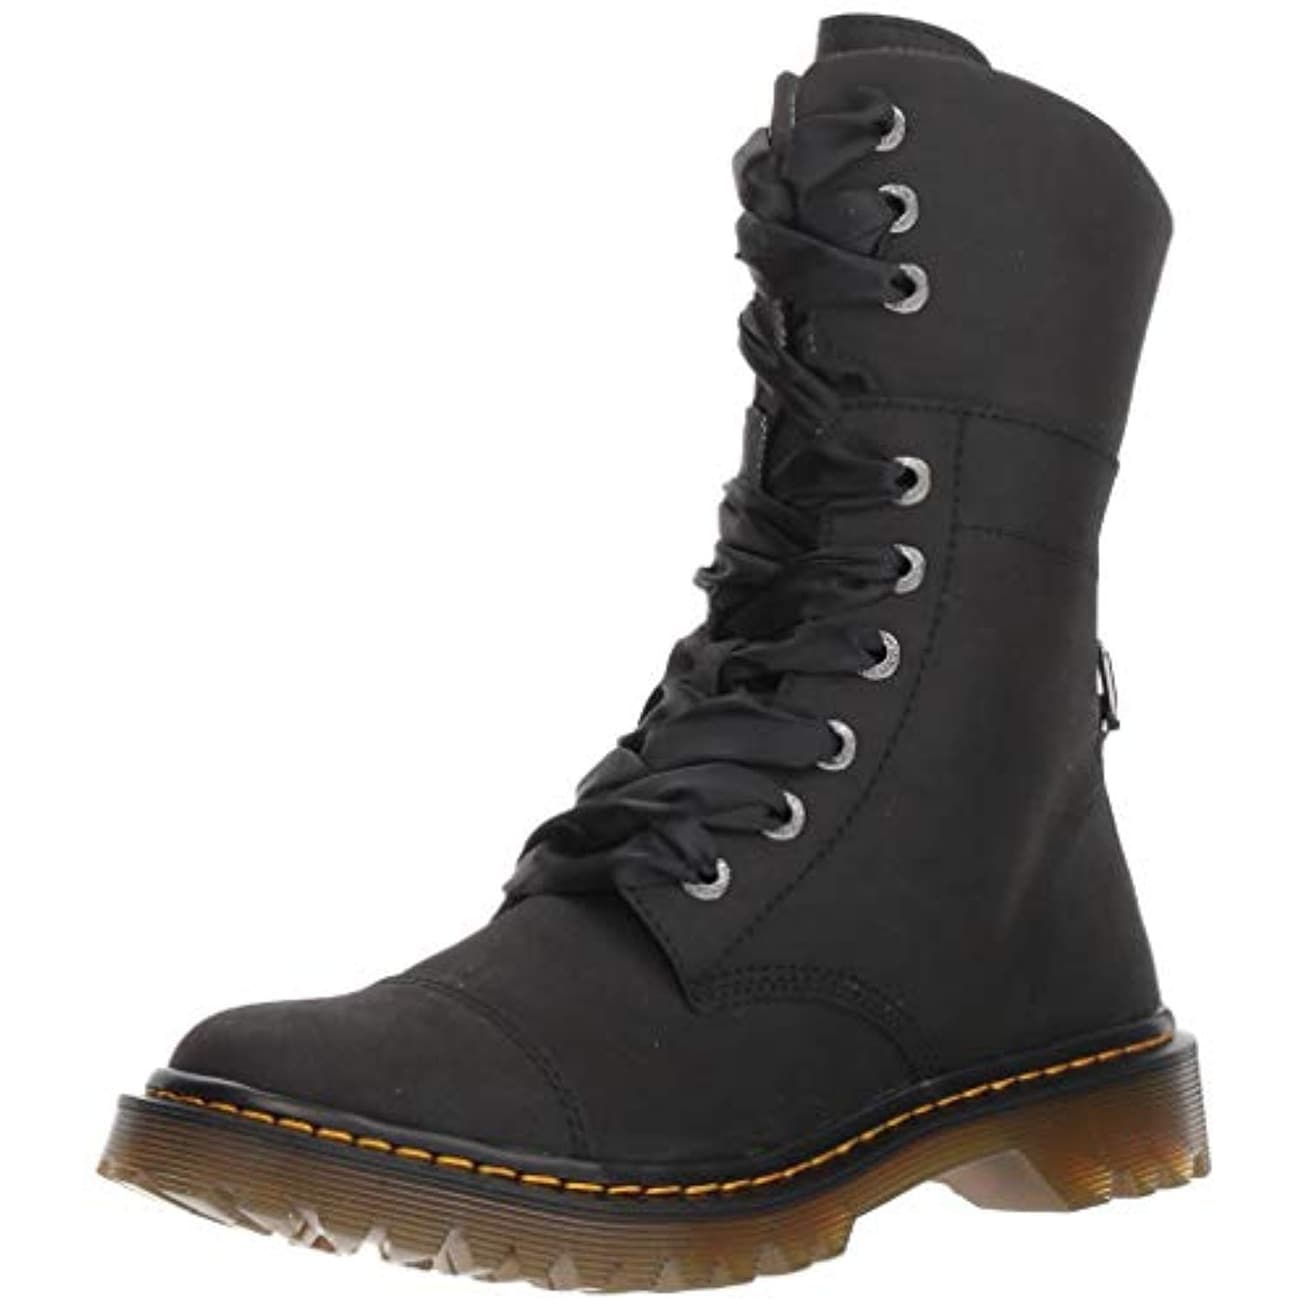 size 9 womens boots uk